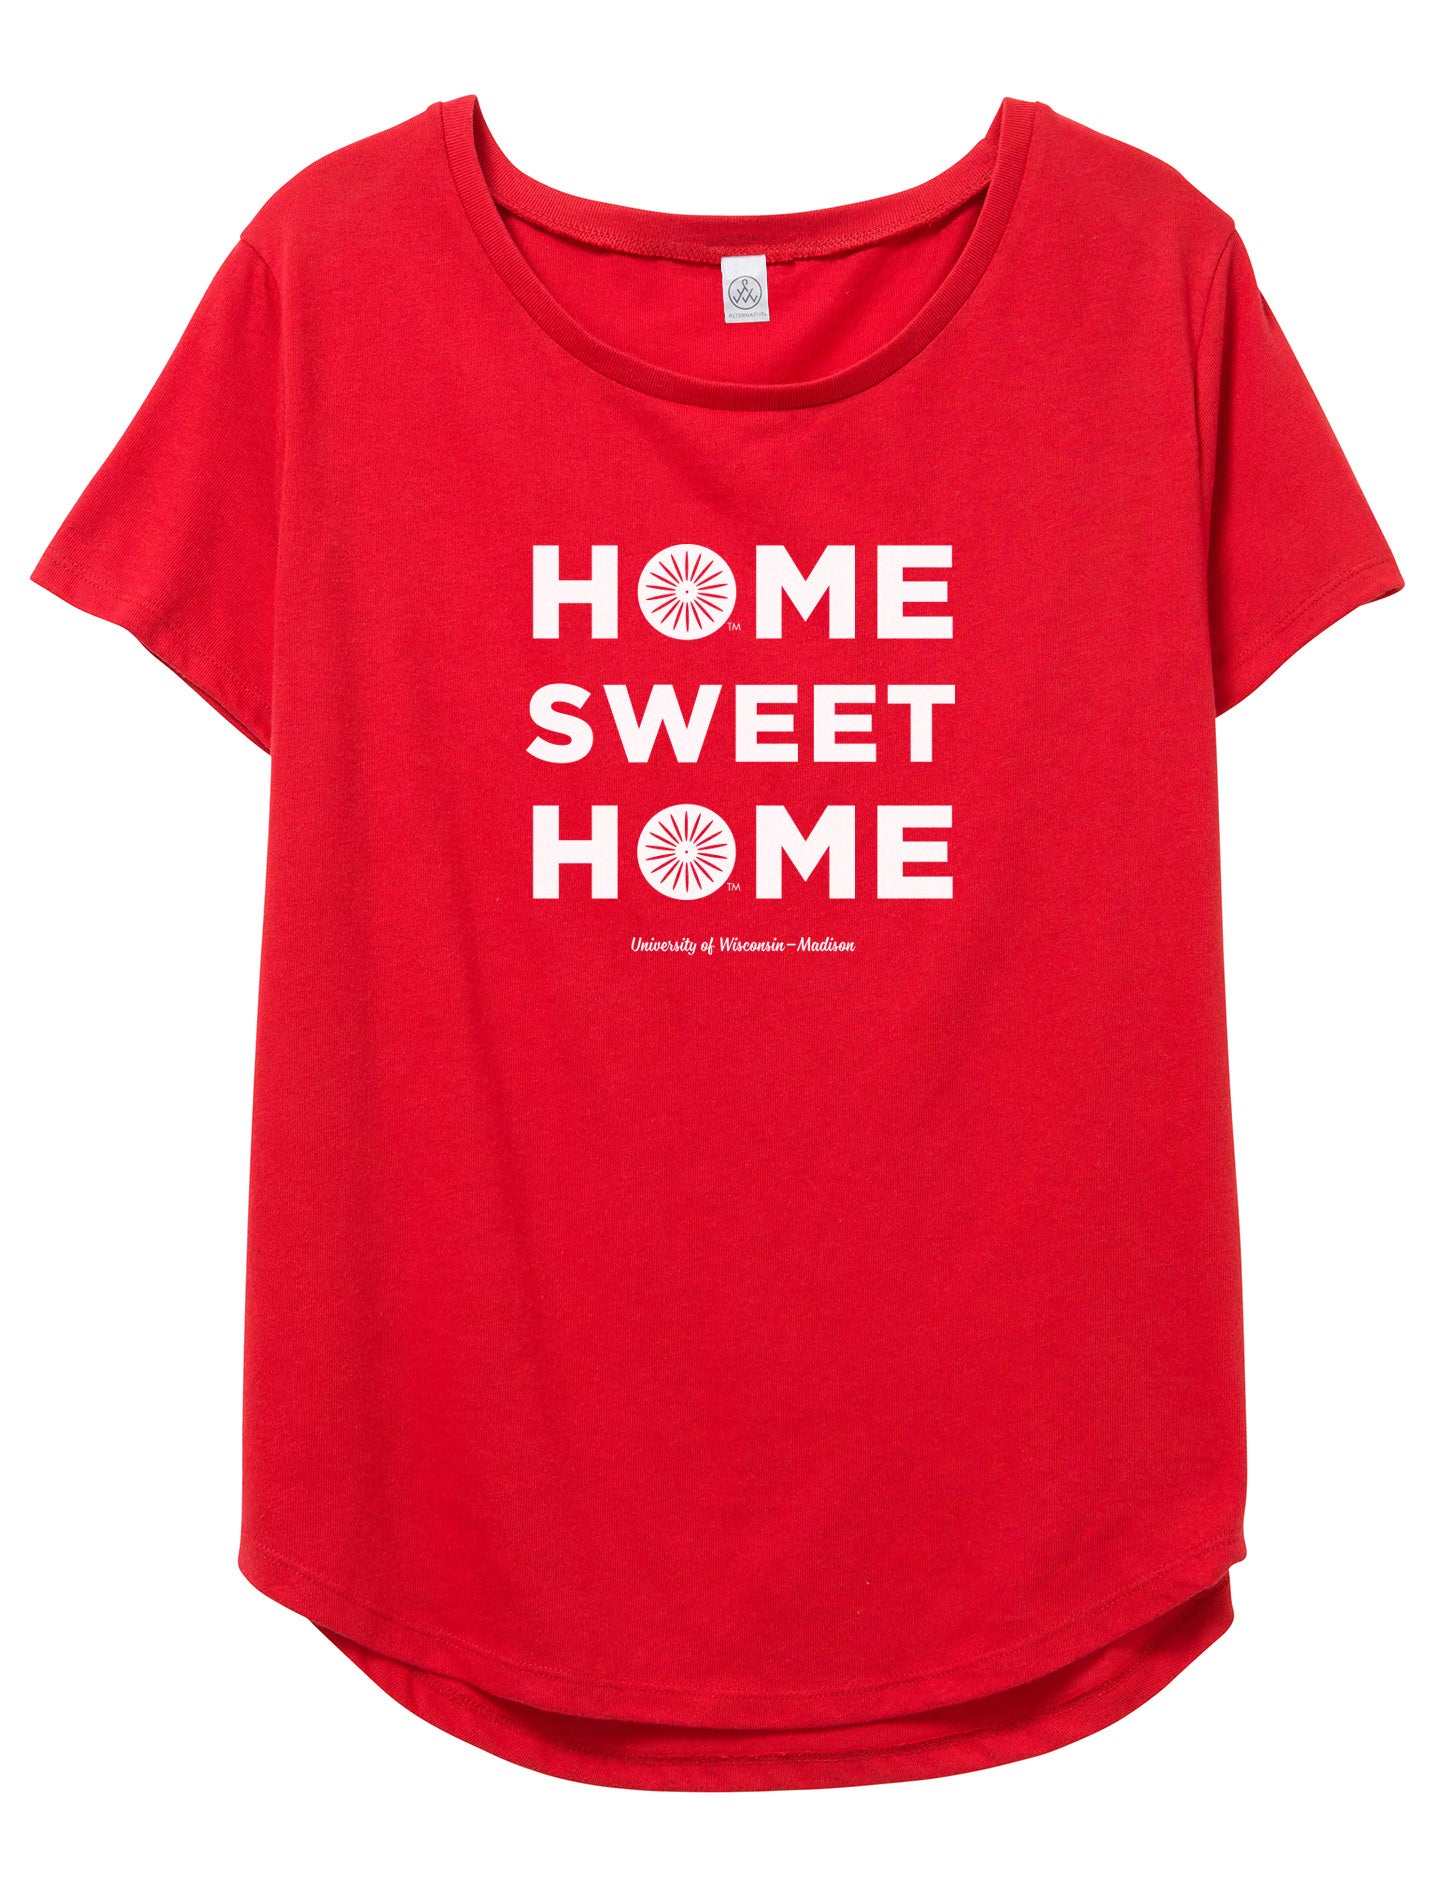 Home Sweet Home Women's Red Tee